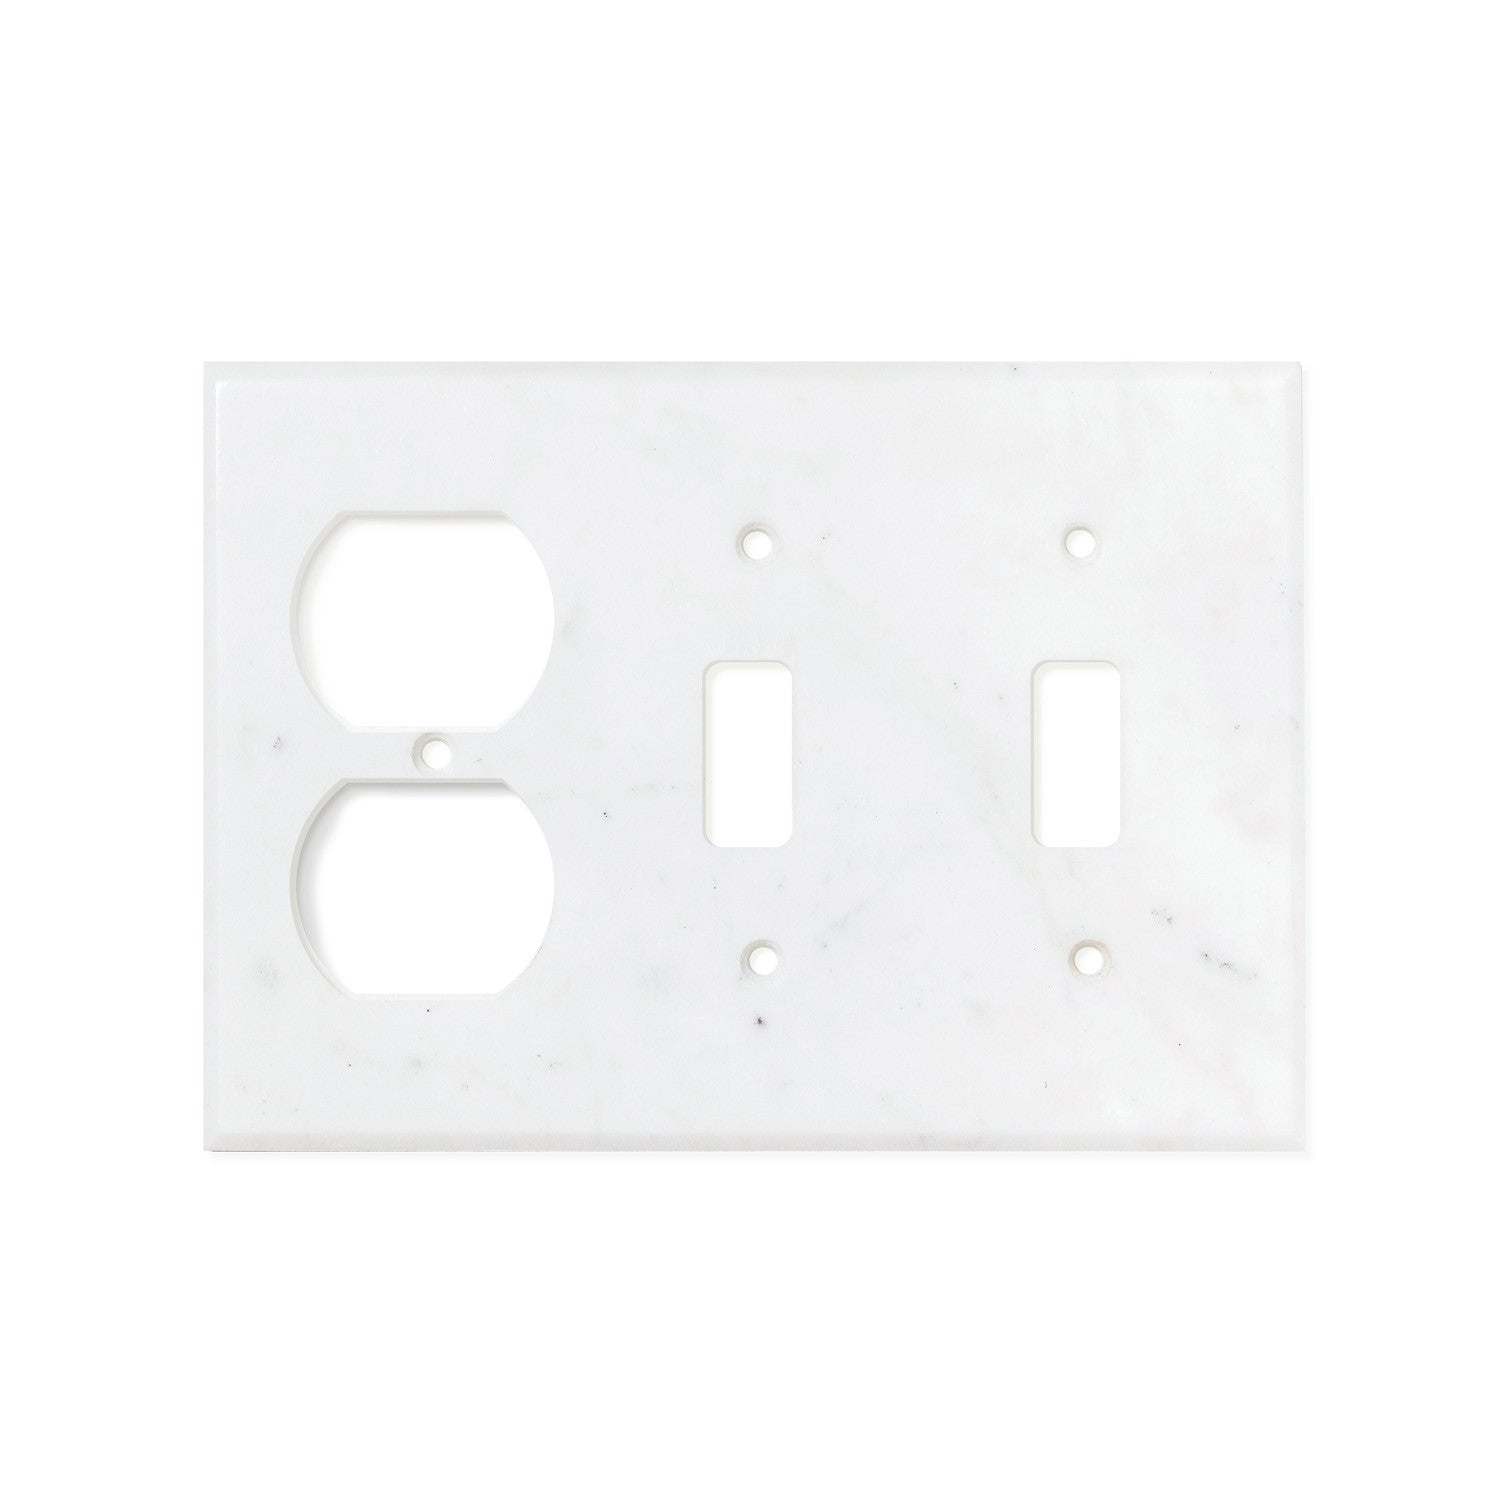 Bianco Carrara (Carrara White) Marble Switch Plate Cover, Honed (DOUBLE TOGGLE DUPLEX) - Tilephile